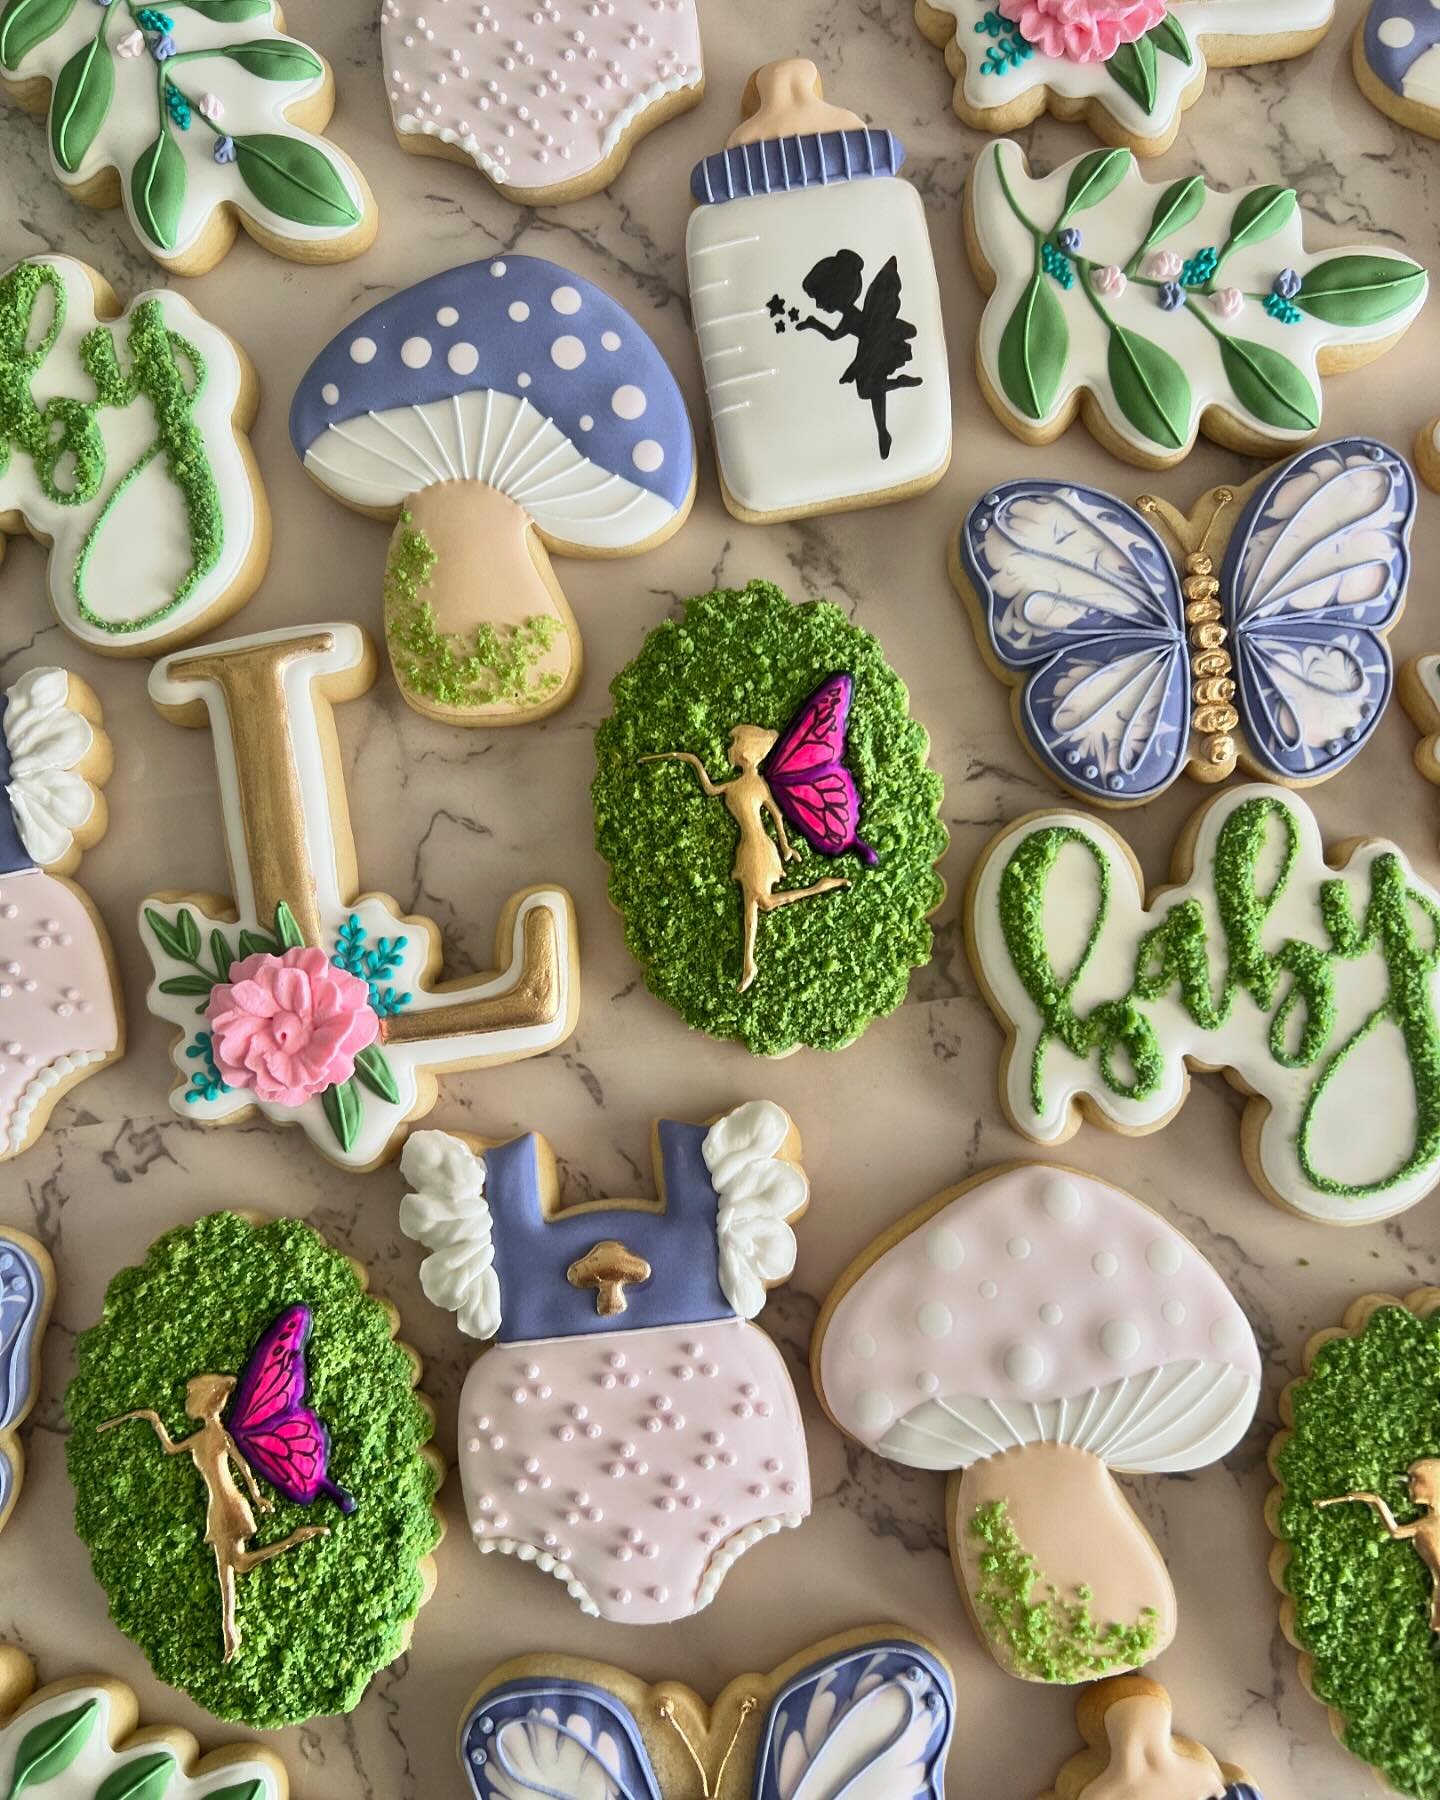 &ldquo;We are Enchanted to meet you&rdquo; baby shower set. 🍄🧚🍃🦋
.
.
.
#cookies #sugarcookies #sugarcookiemarketing #cookiedecorating #cake #wiltoncakes #garden #enchantedbabyshower #fairy #mushroom #killercakes #havasu #lakehavasu #havasucakes